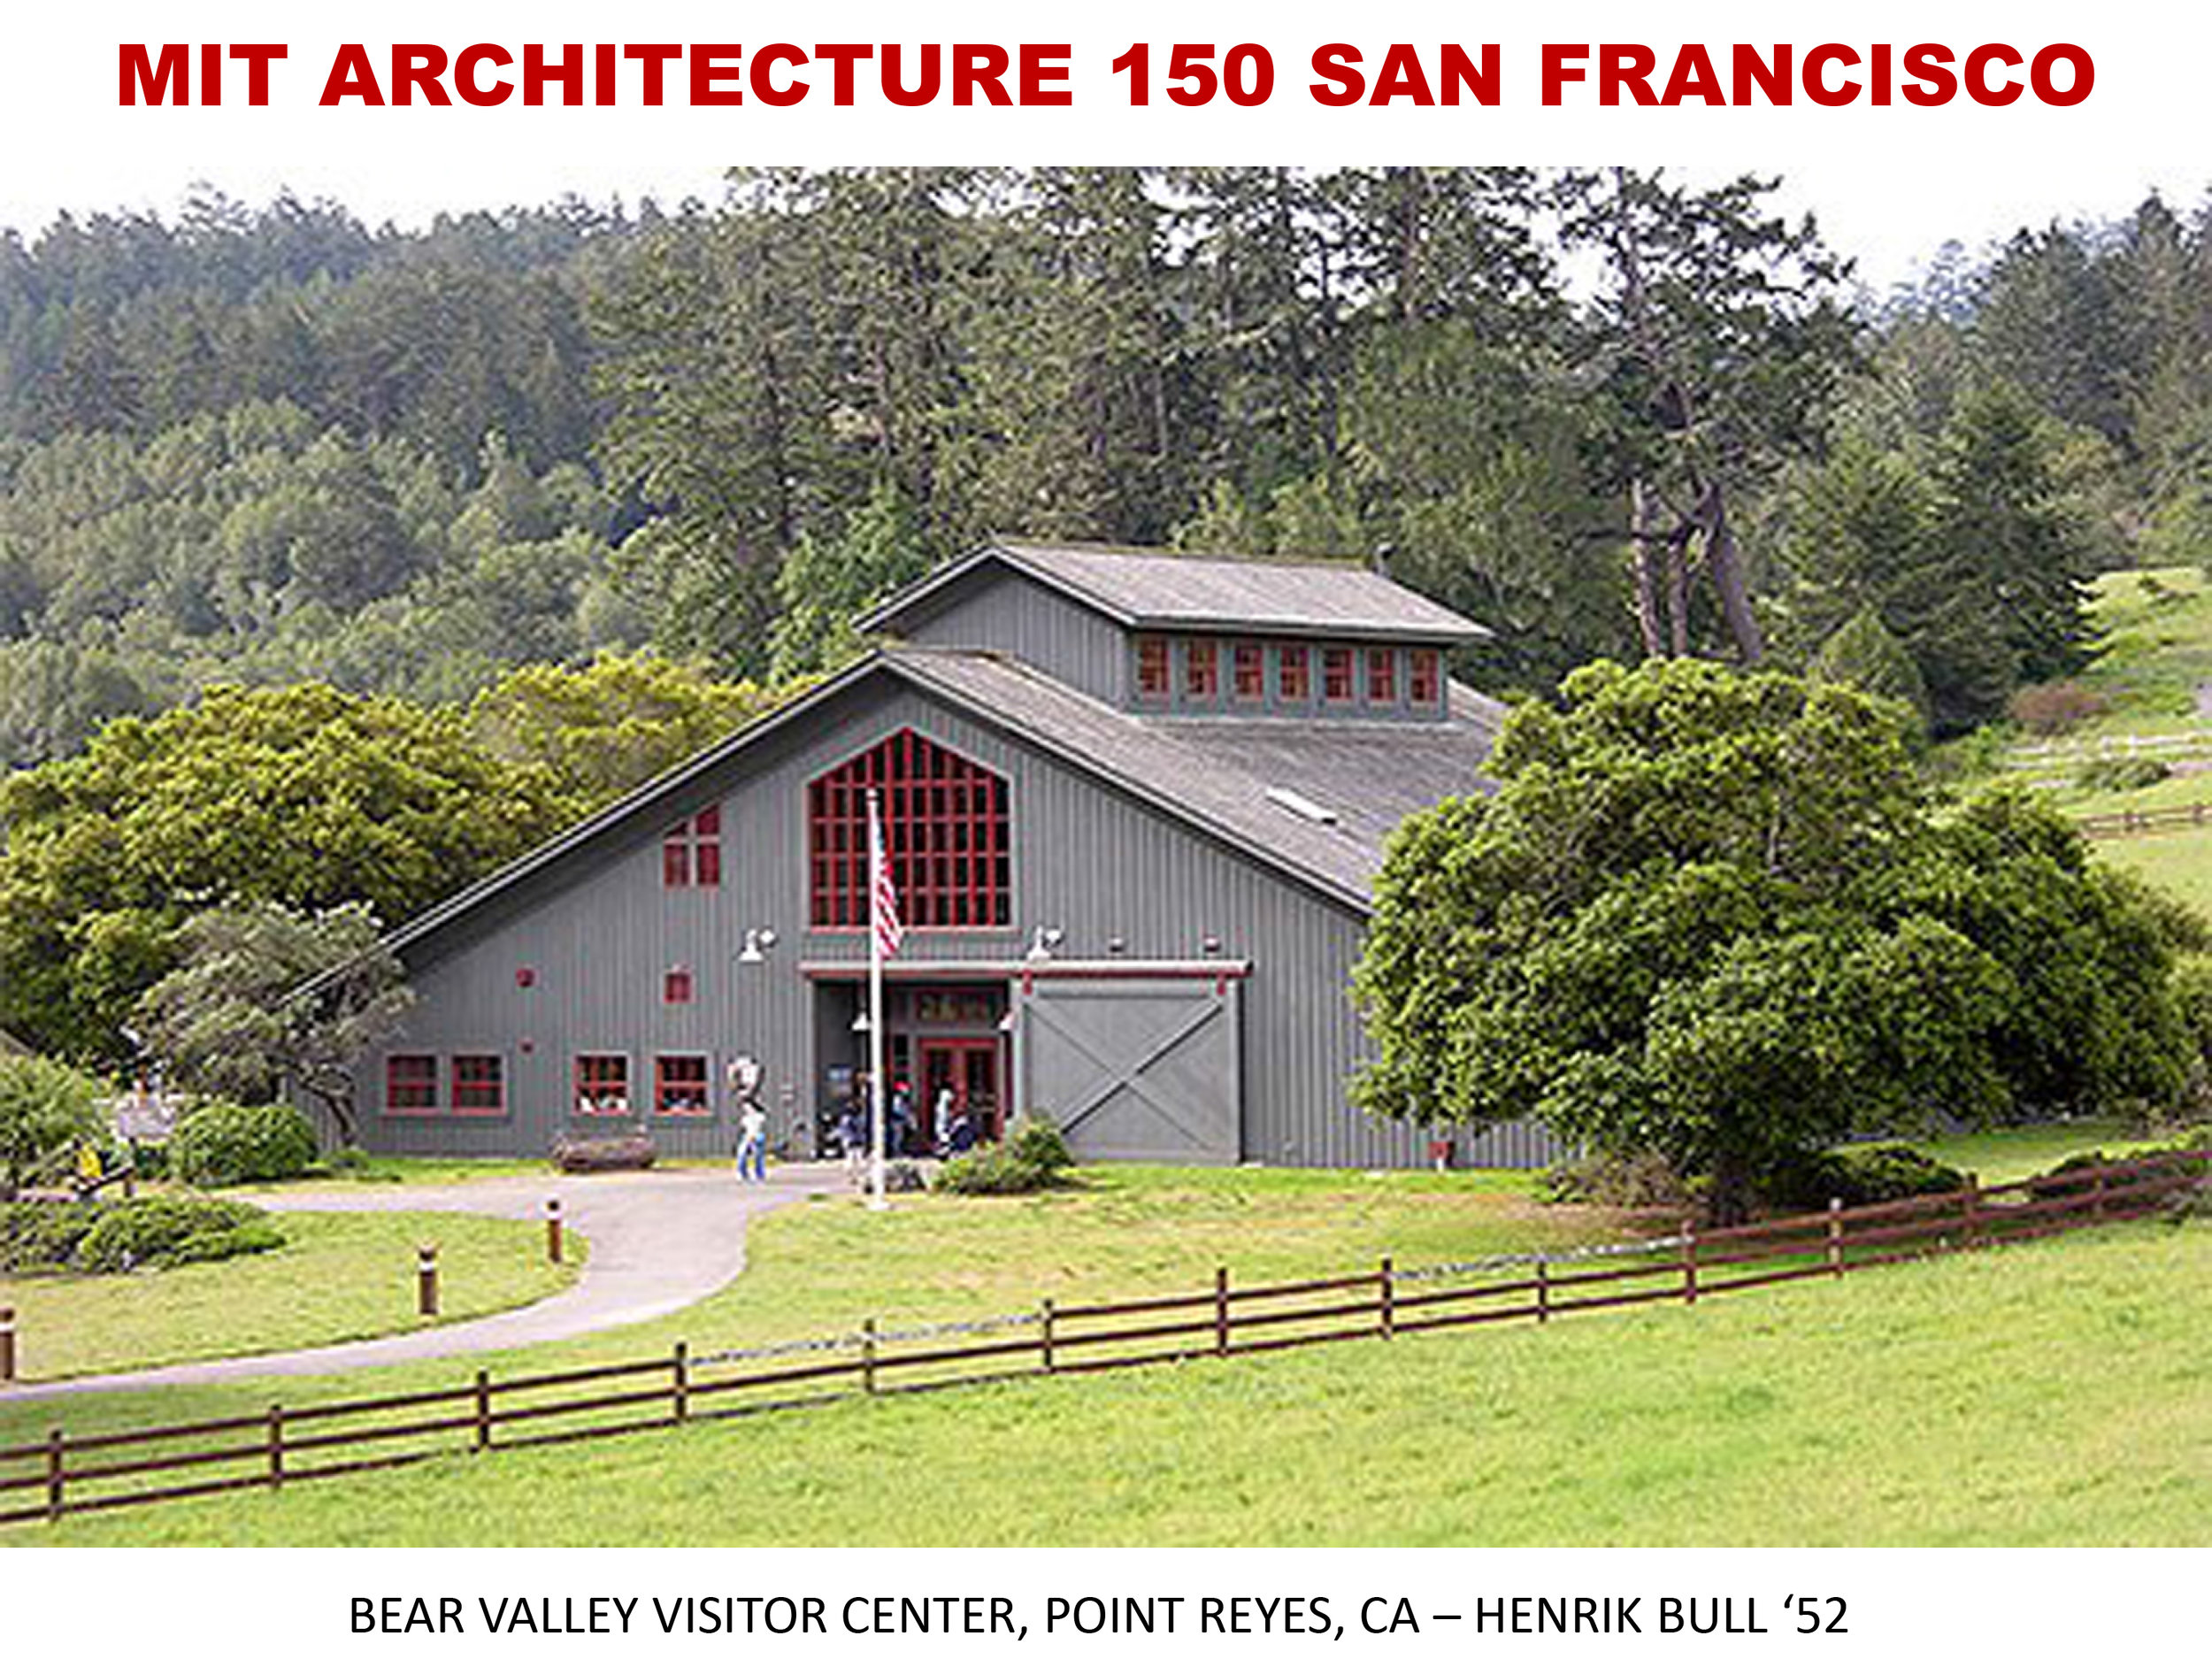 MIT ARCHITECTURE 150 SAN FRANCISCO SLIDESHOW-65 copy.jpg